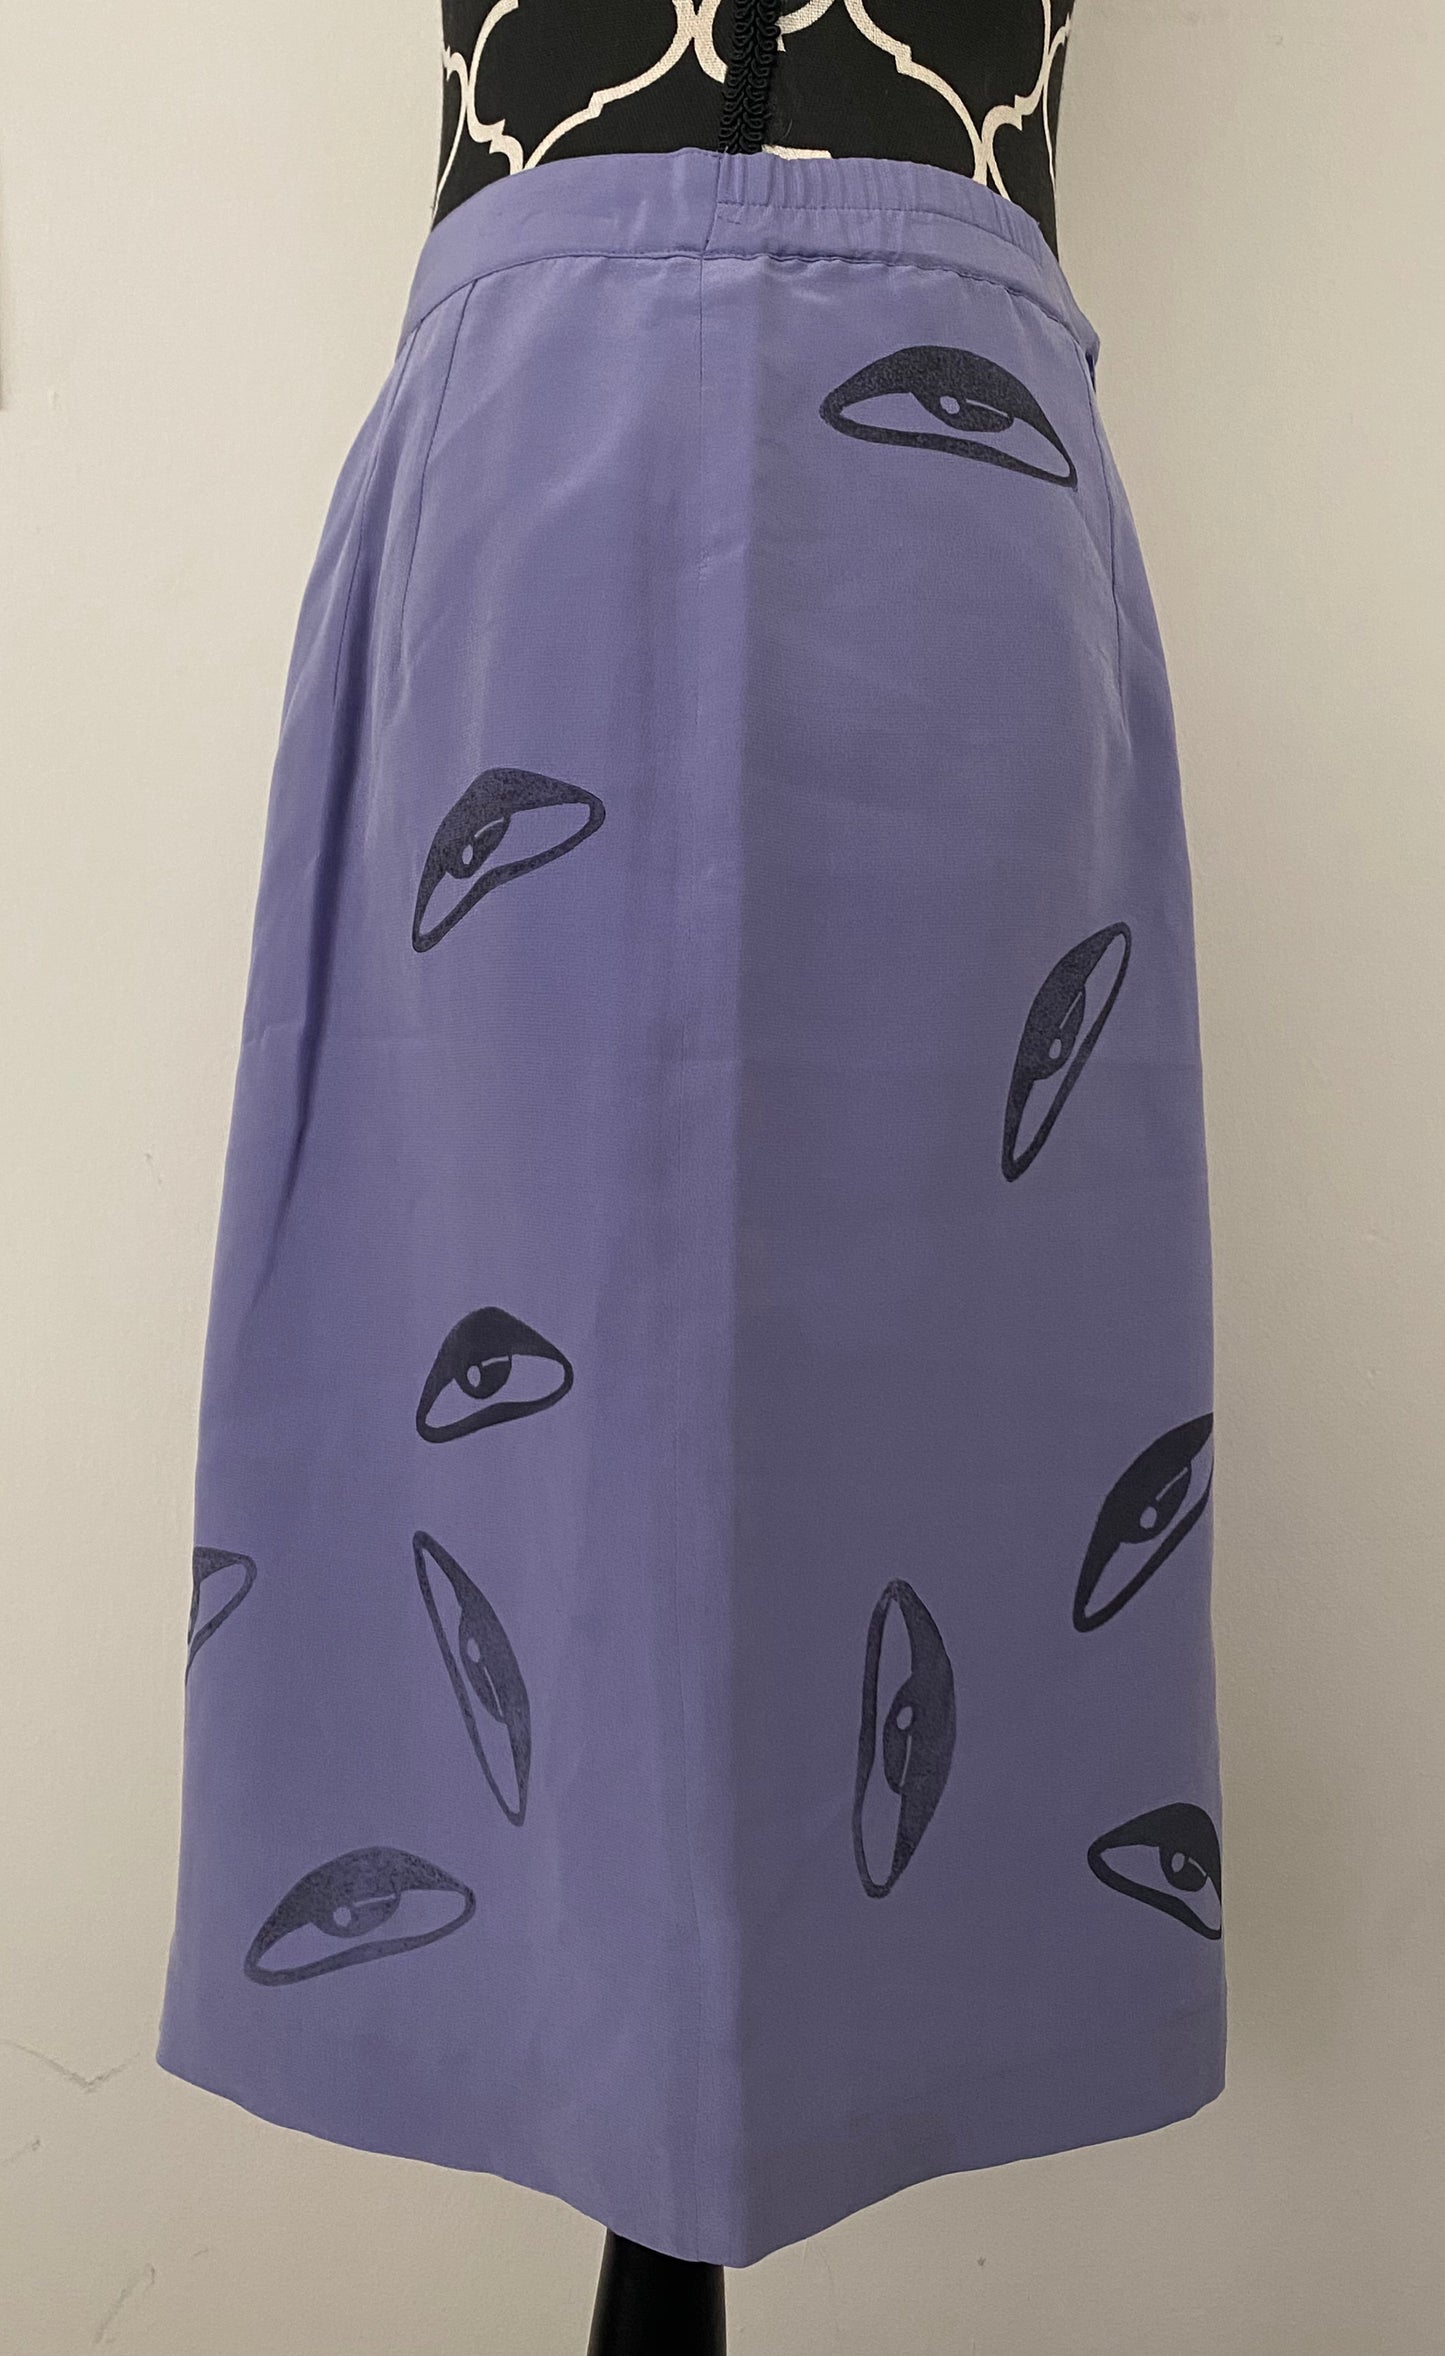 Invasion Printed Skirt